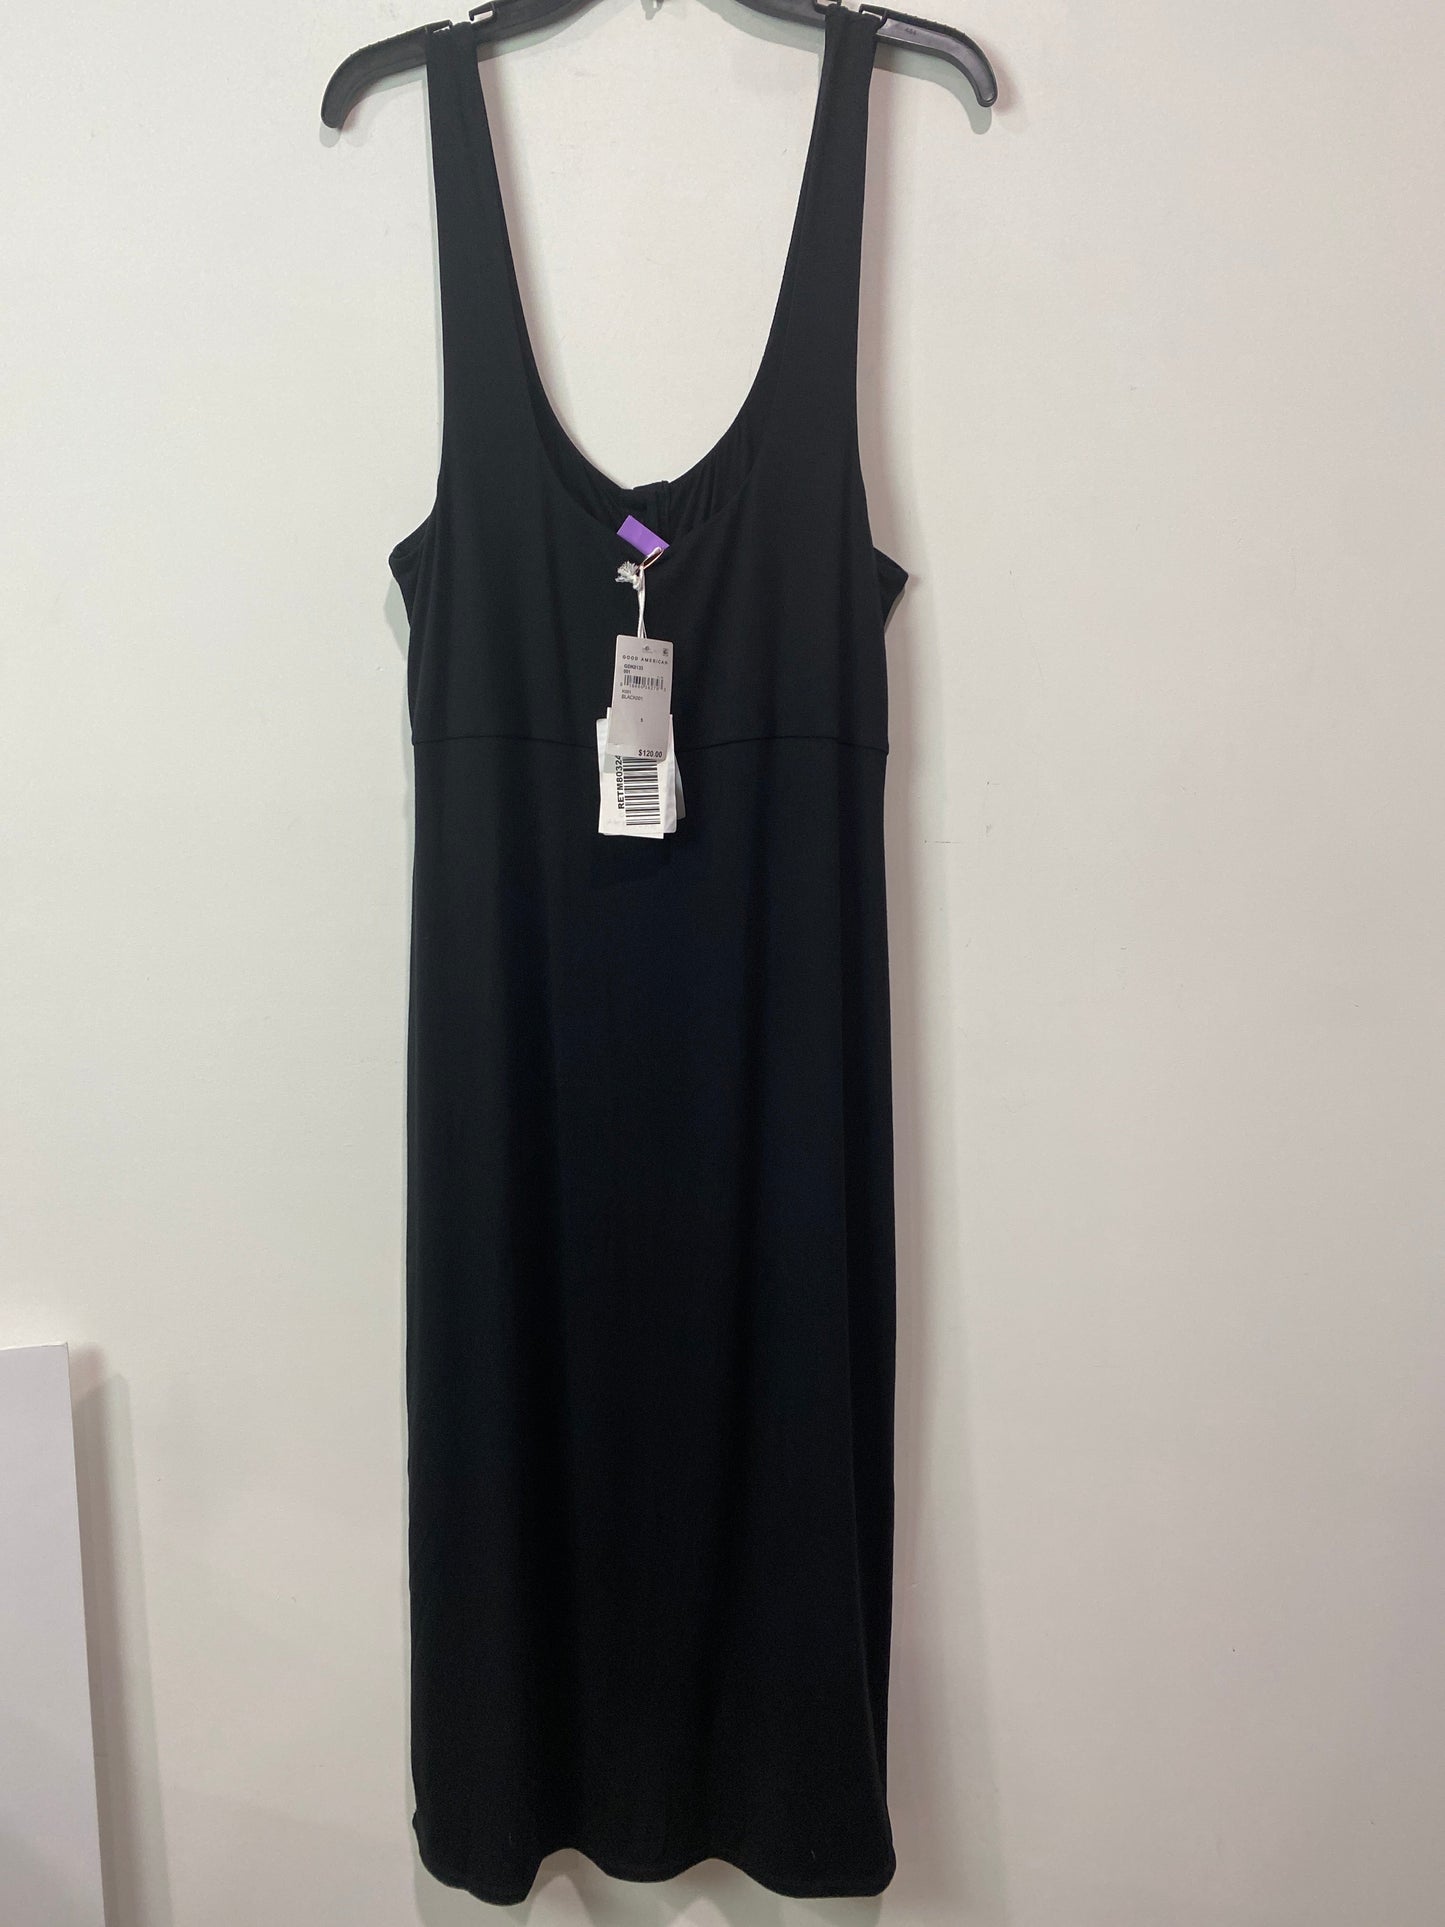 Black Dress Casual Maxi Good American, Size 2x